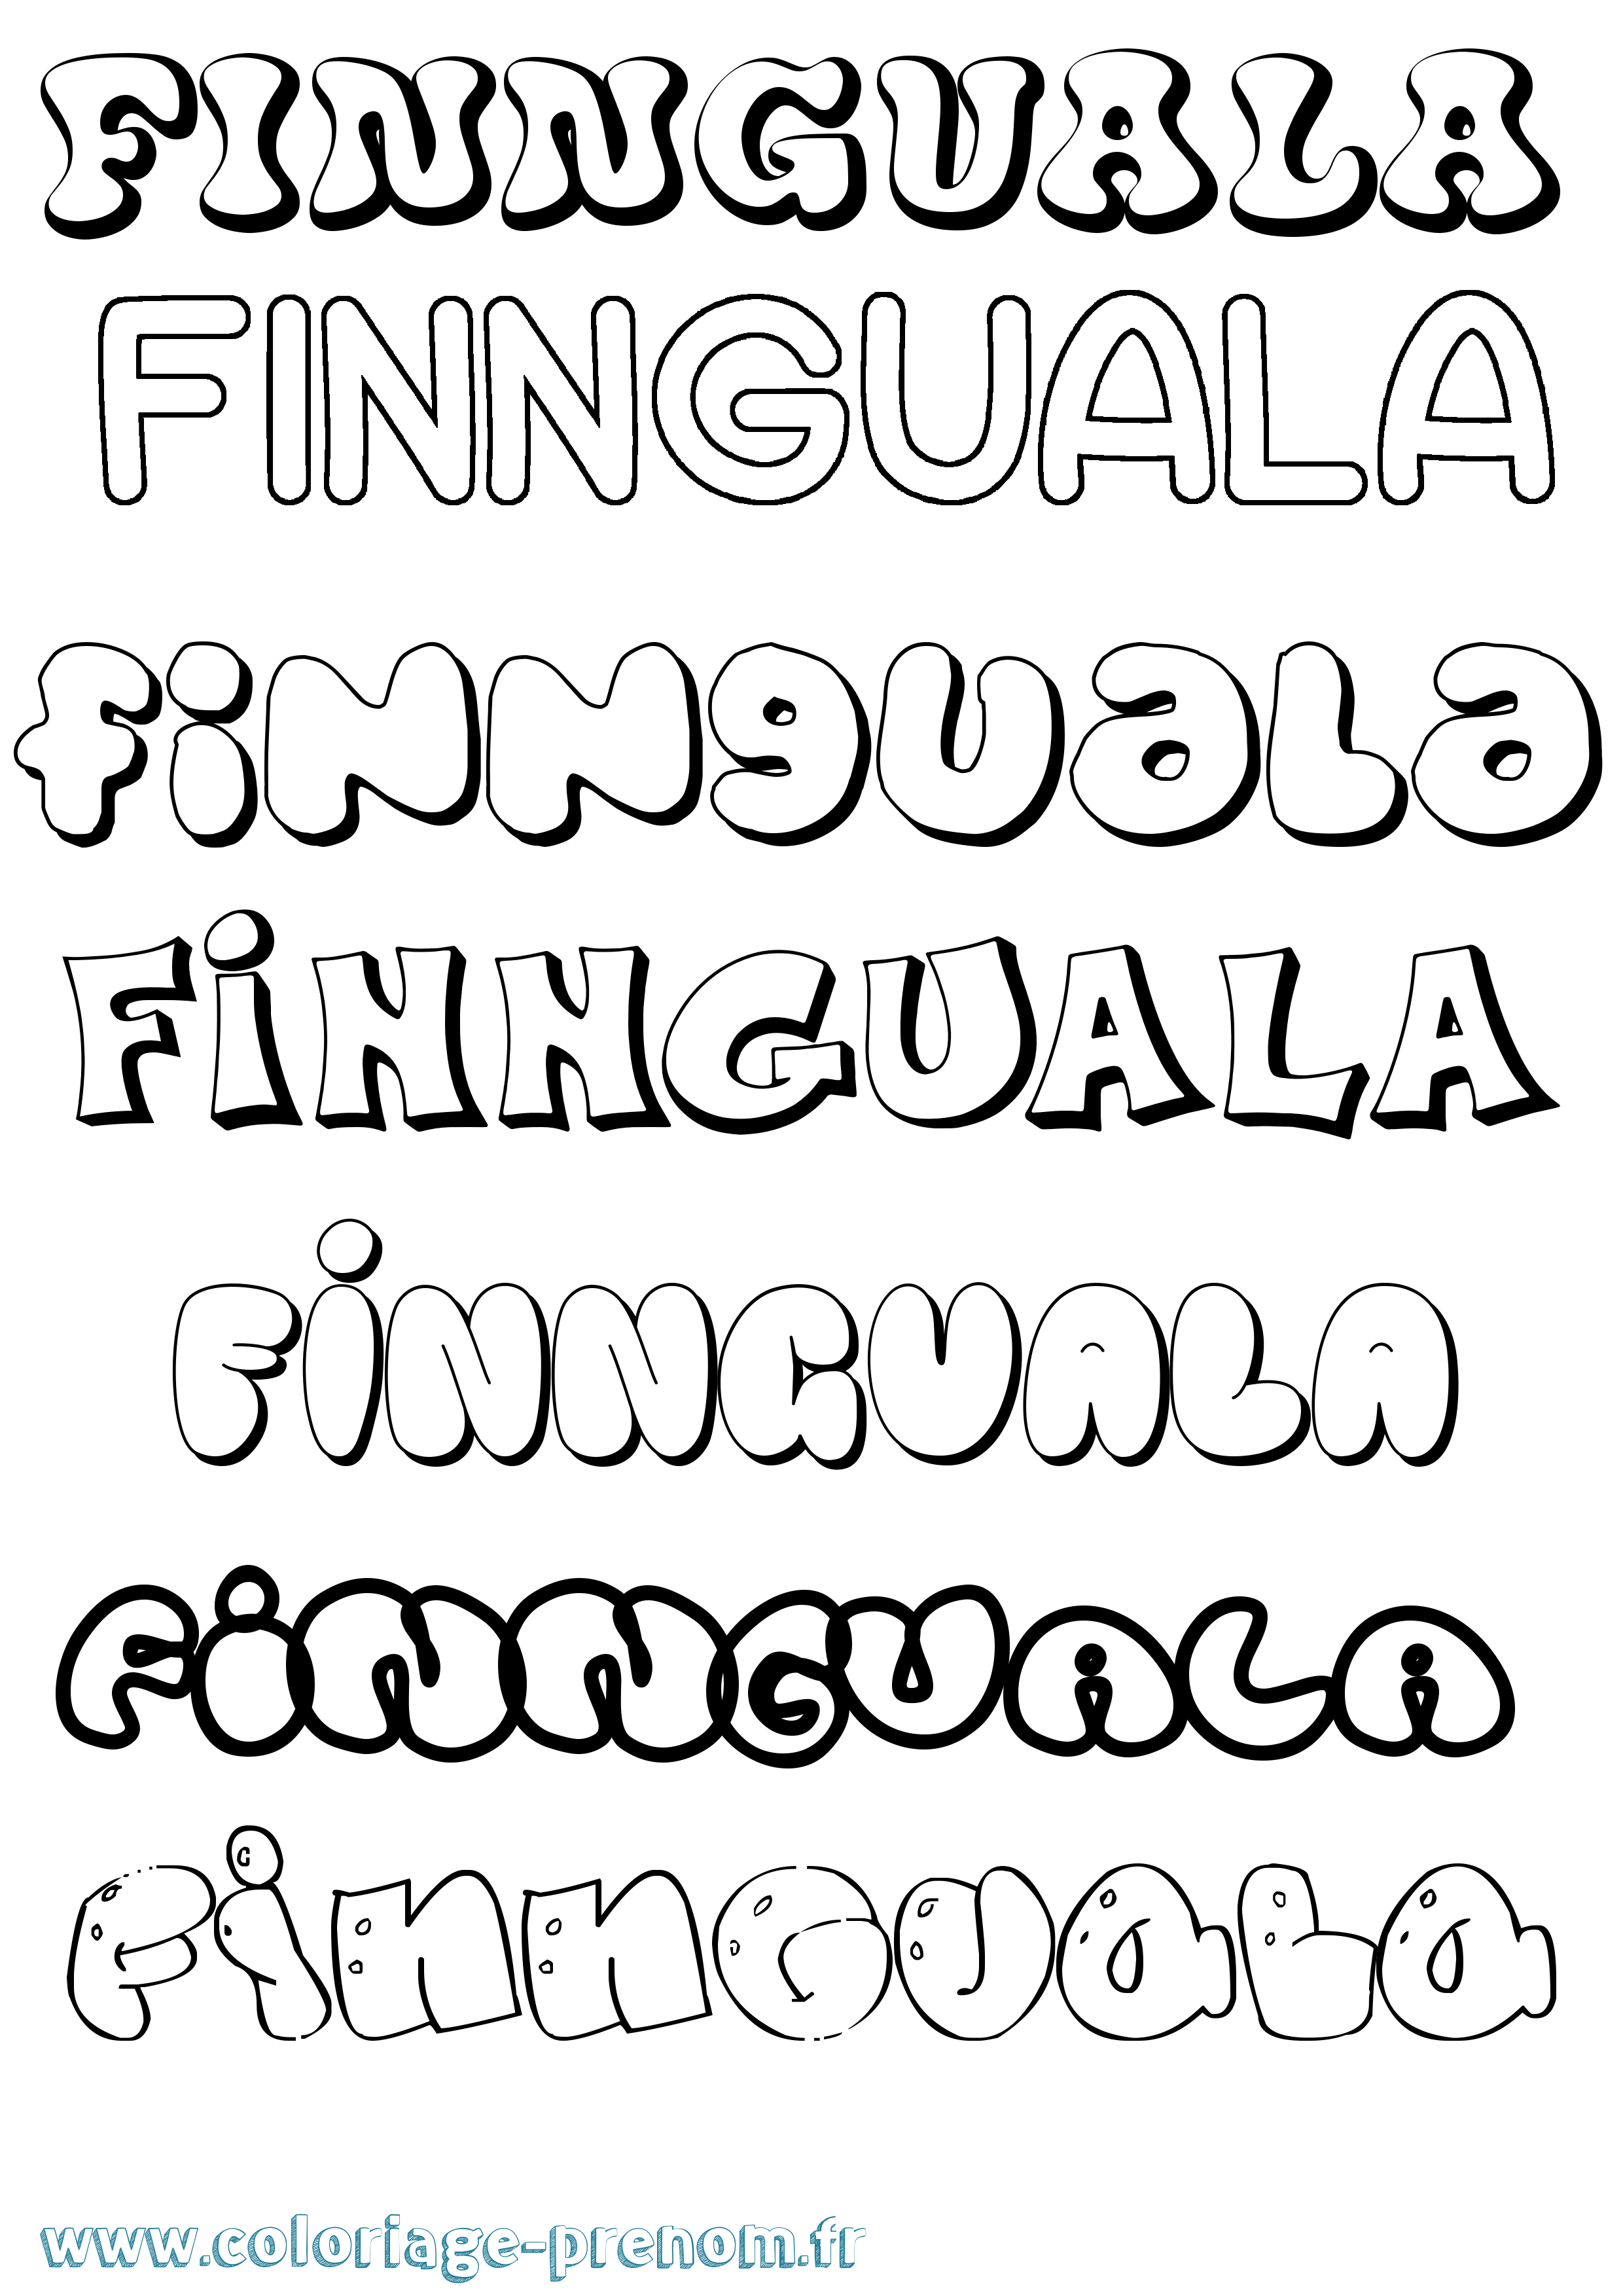 Coloriage prénom Finnguala Bubble